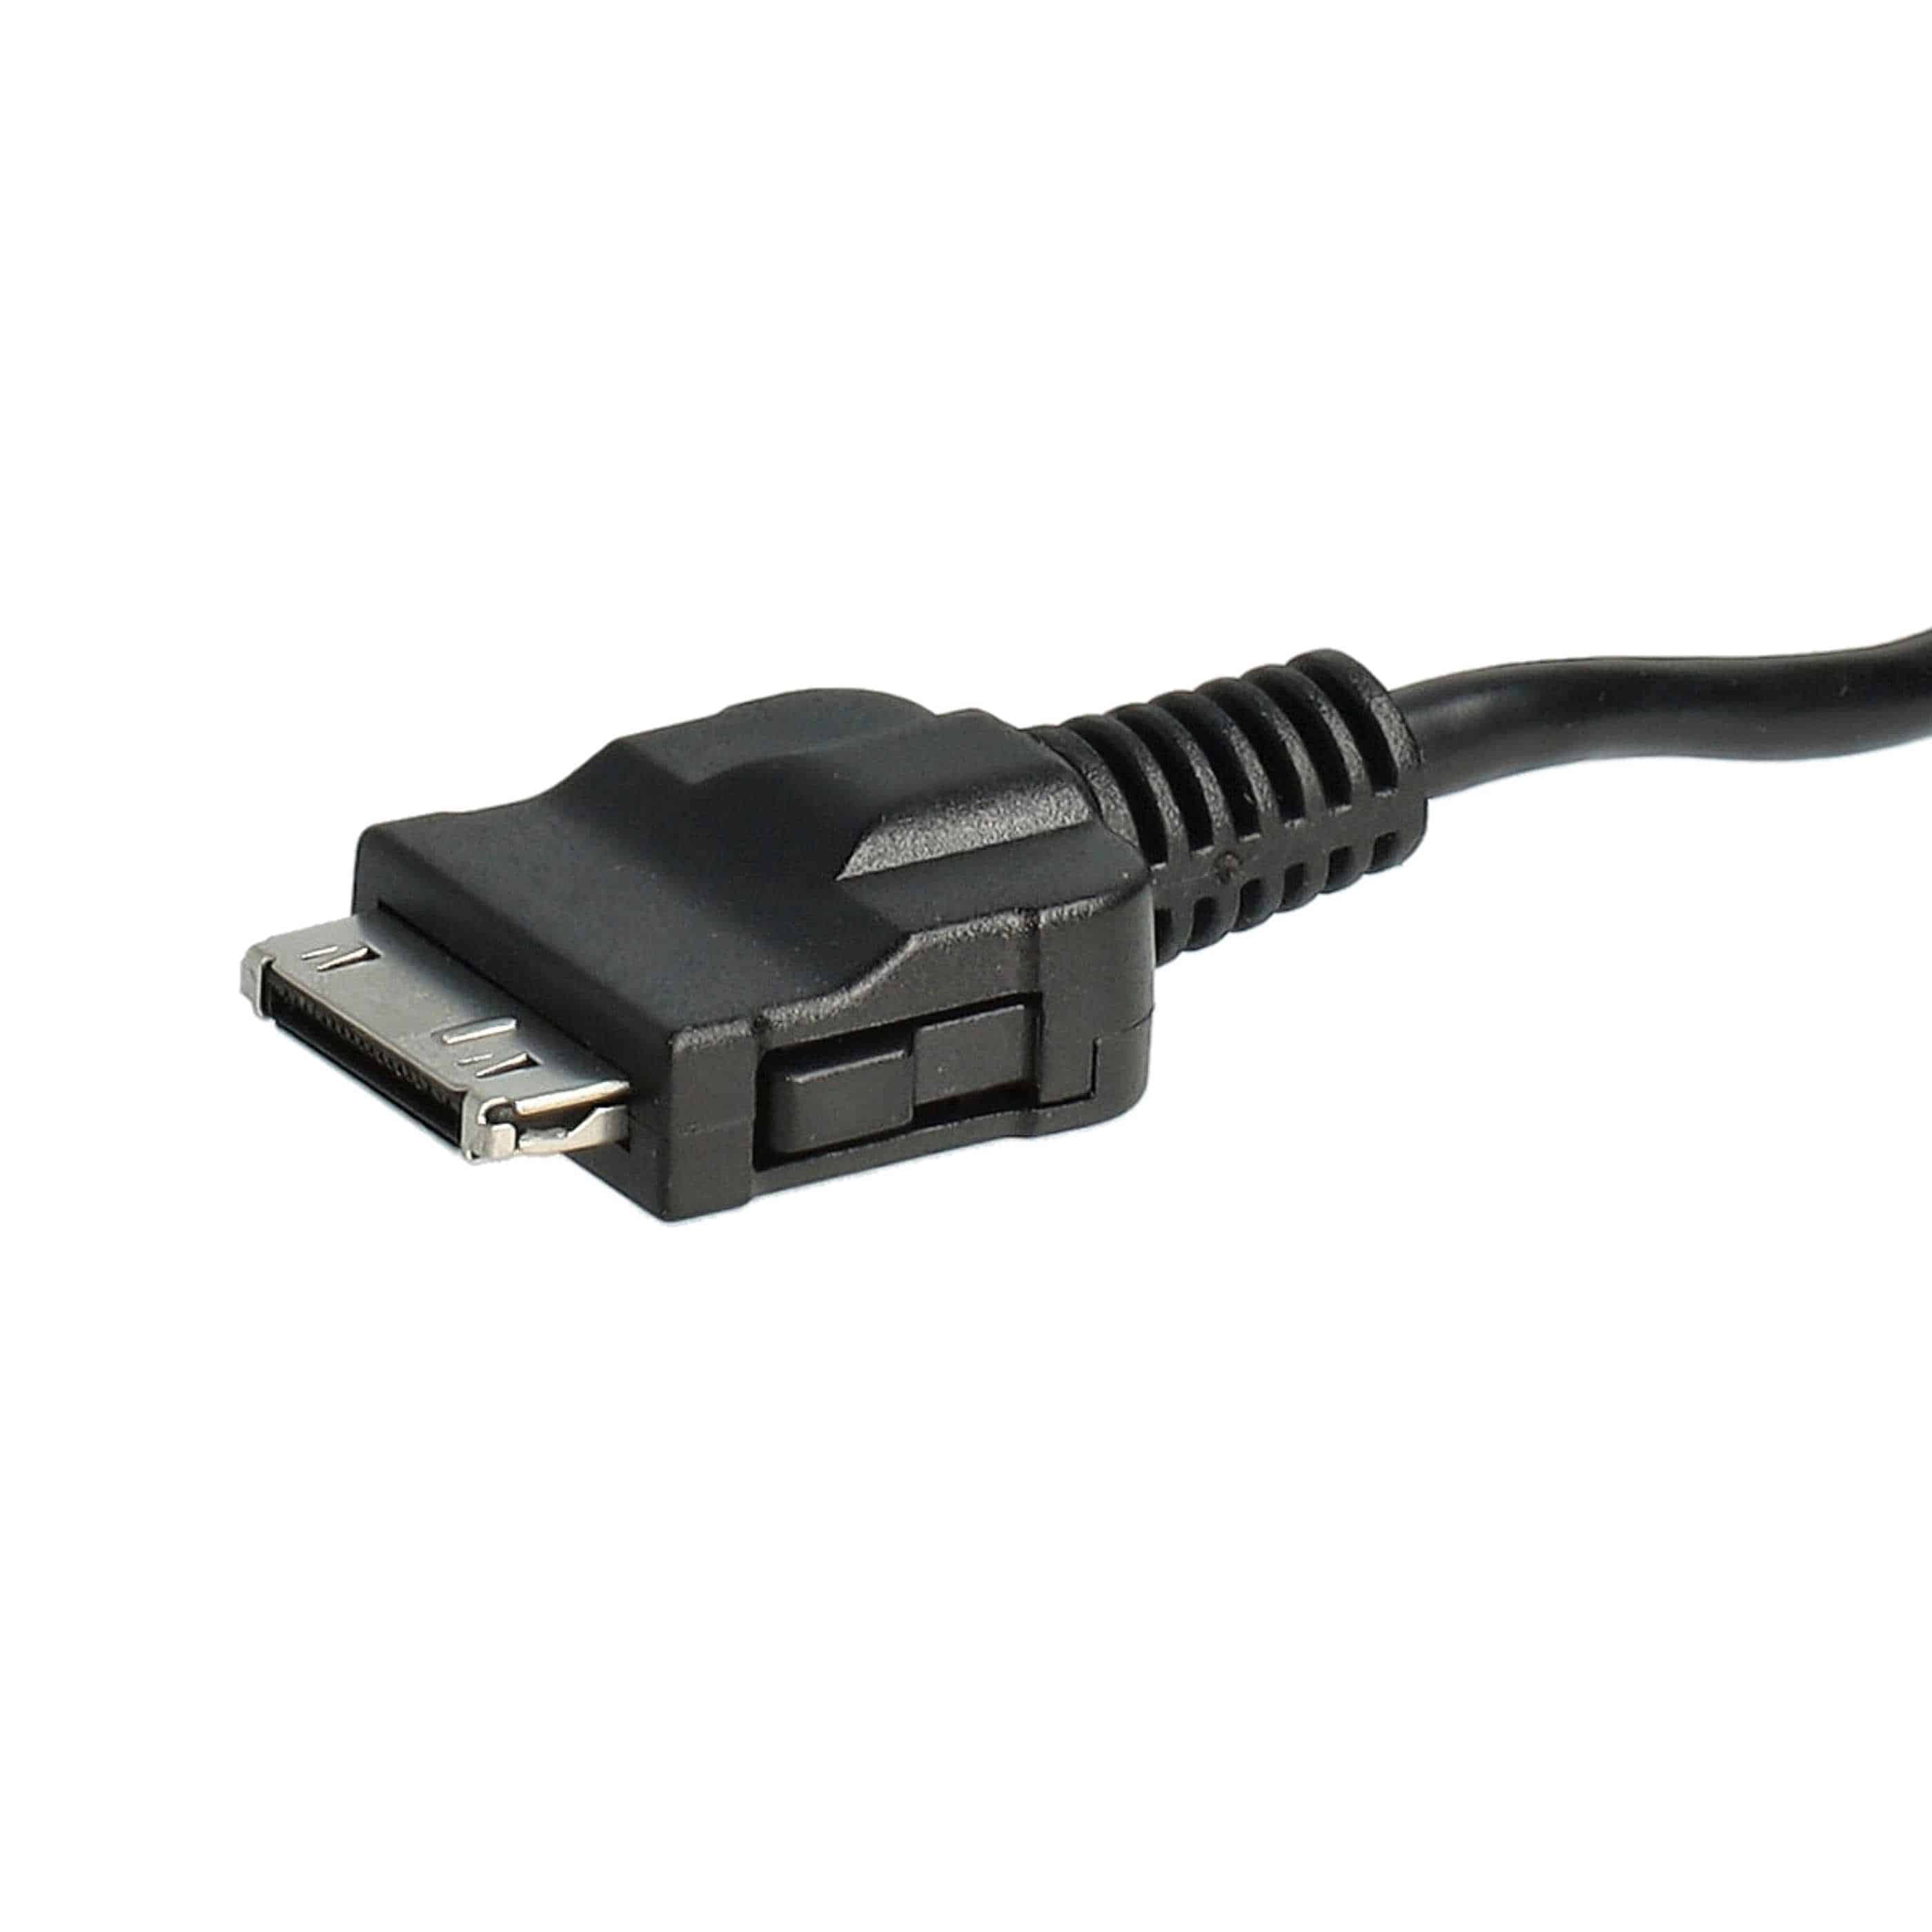 Kabel USB do Iriver H10 1GB i in., 100 cm